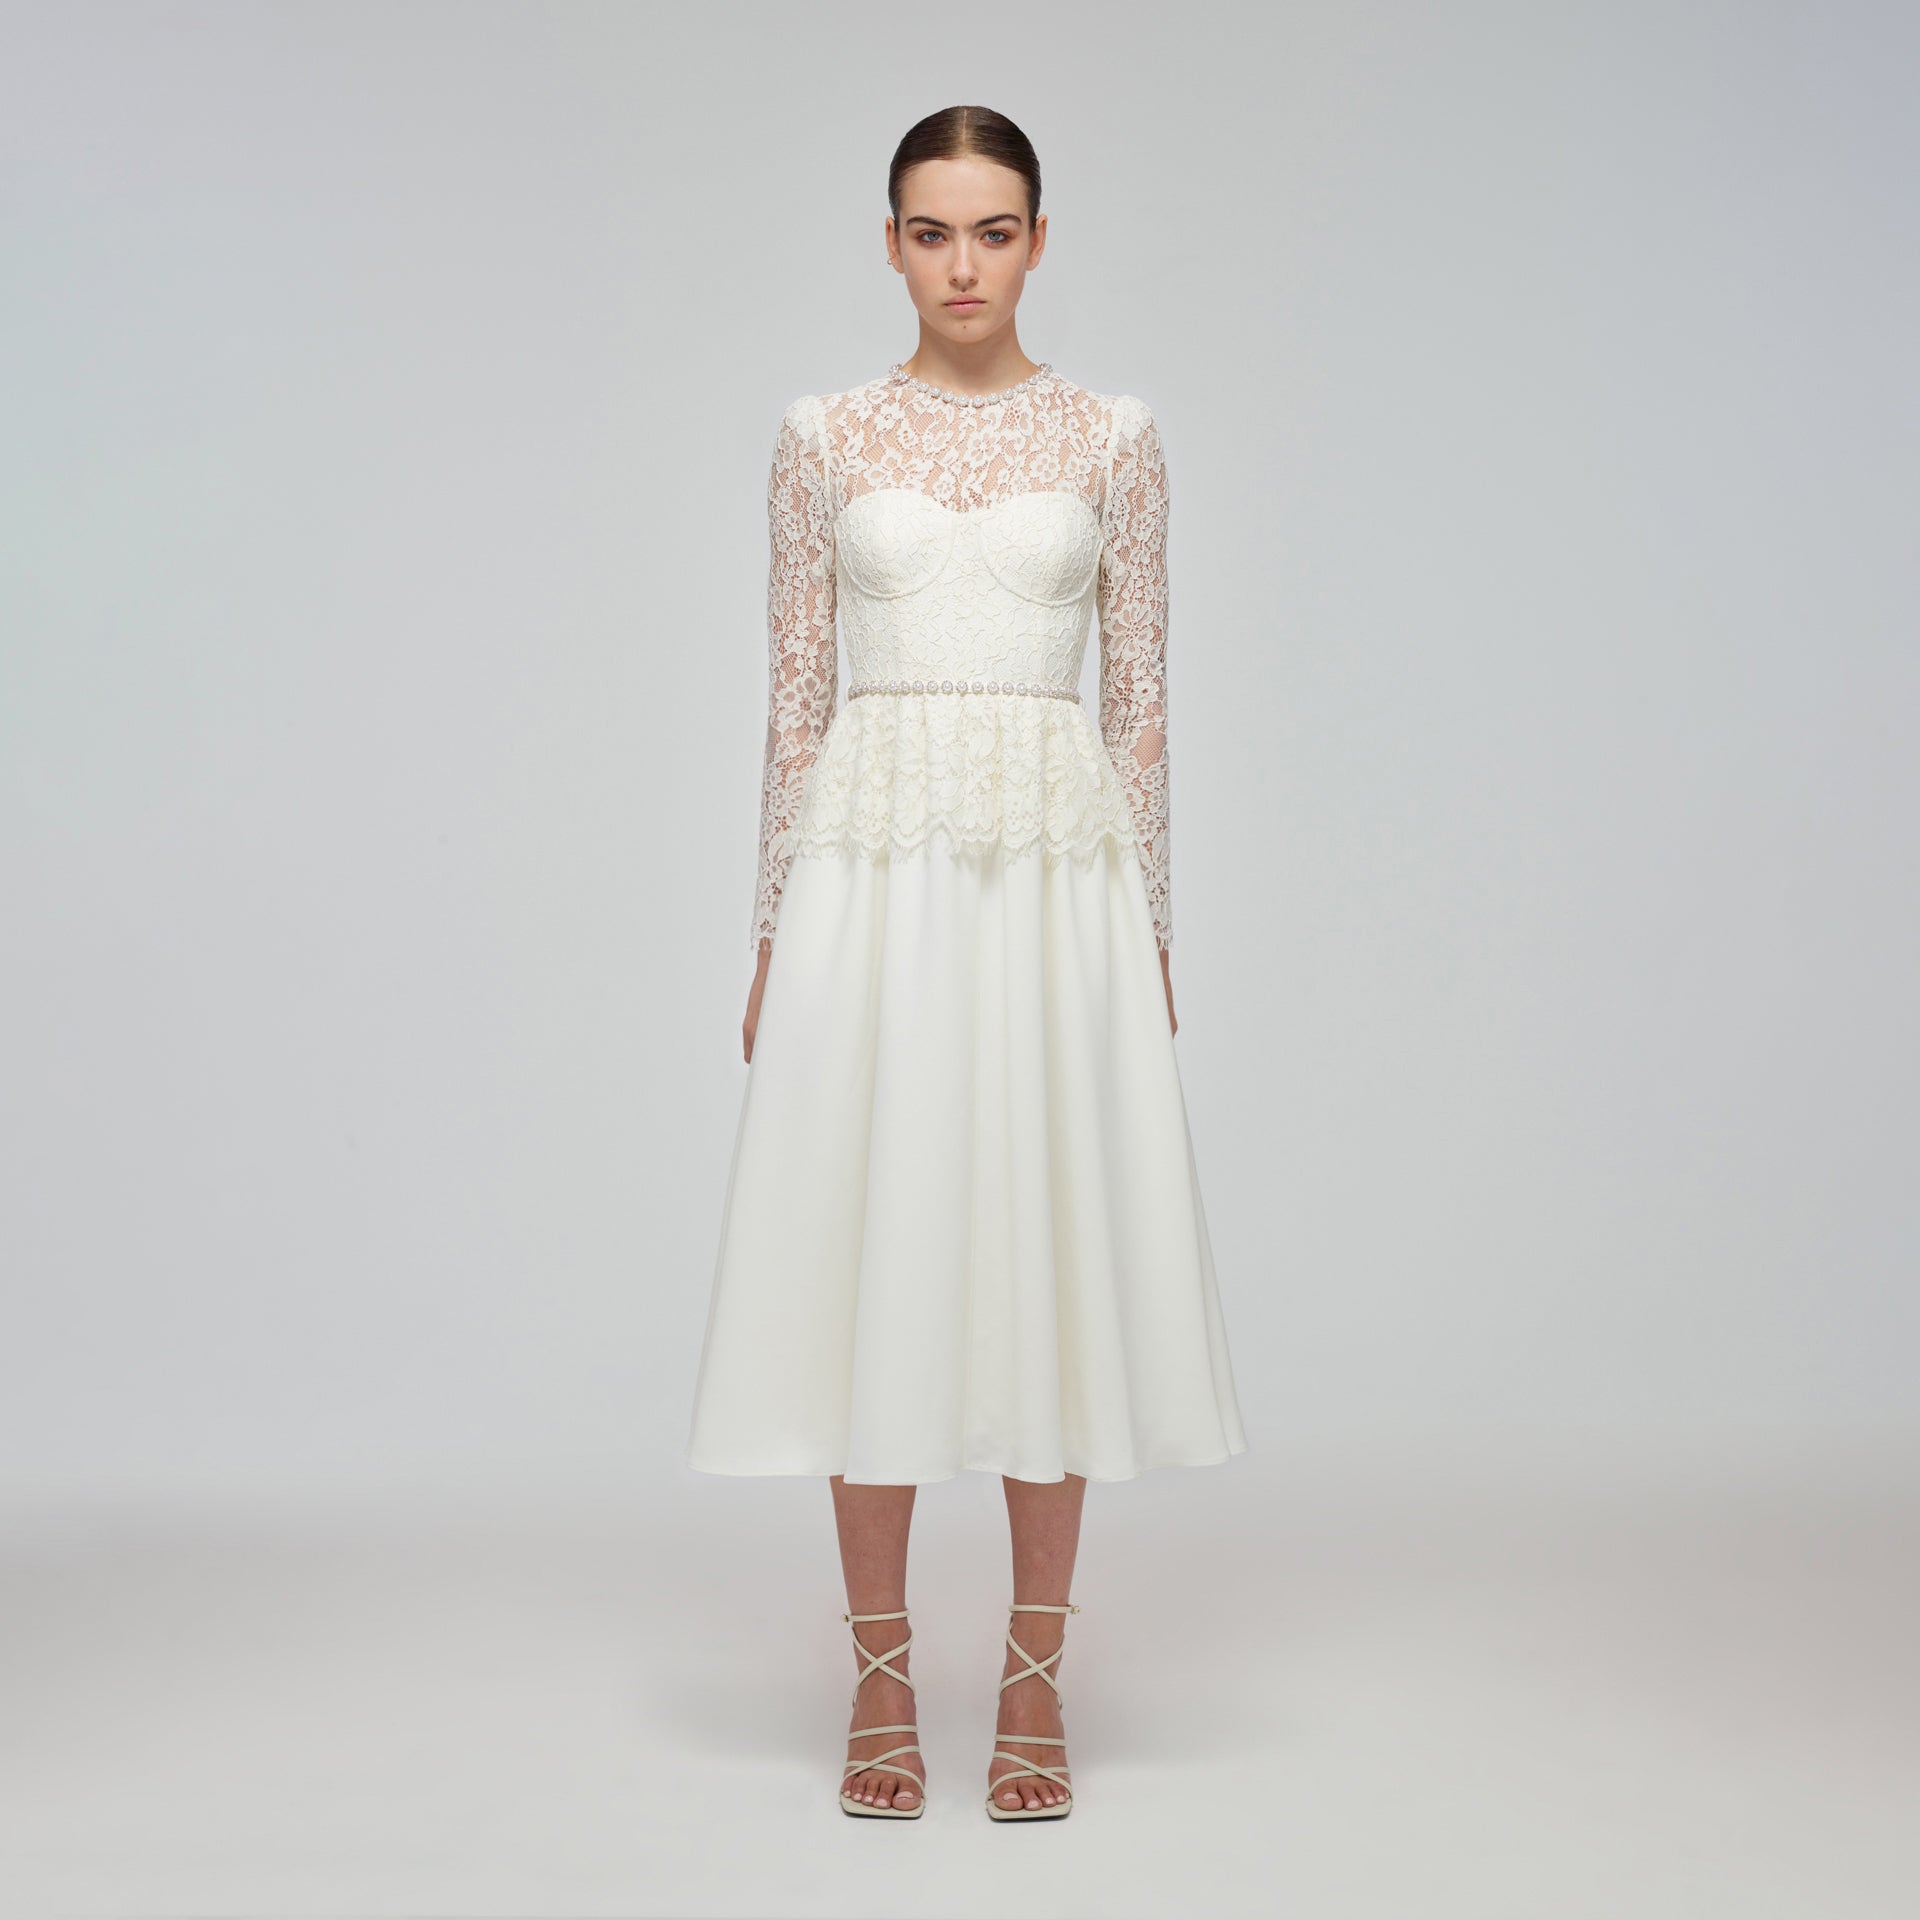 Ivory Corded Lace Voluminous Skirt Midi Dress